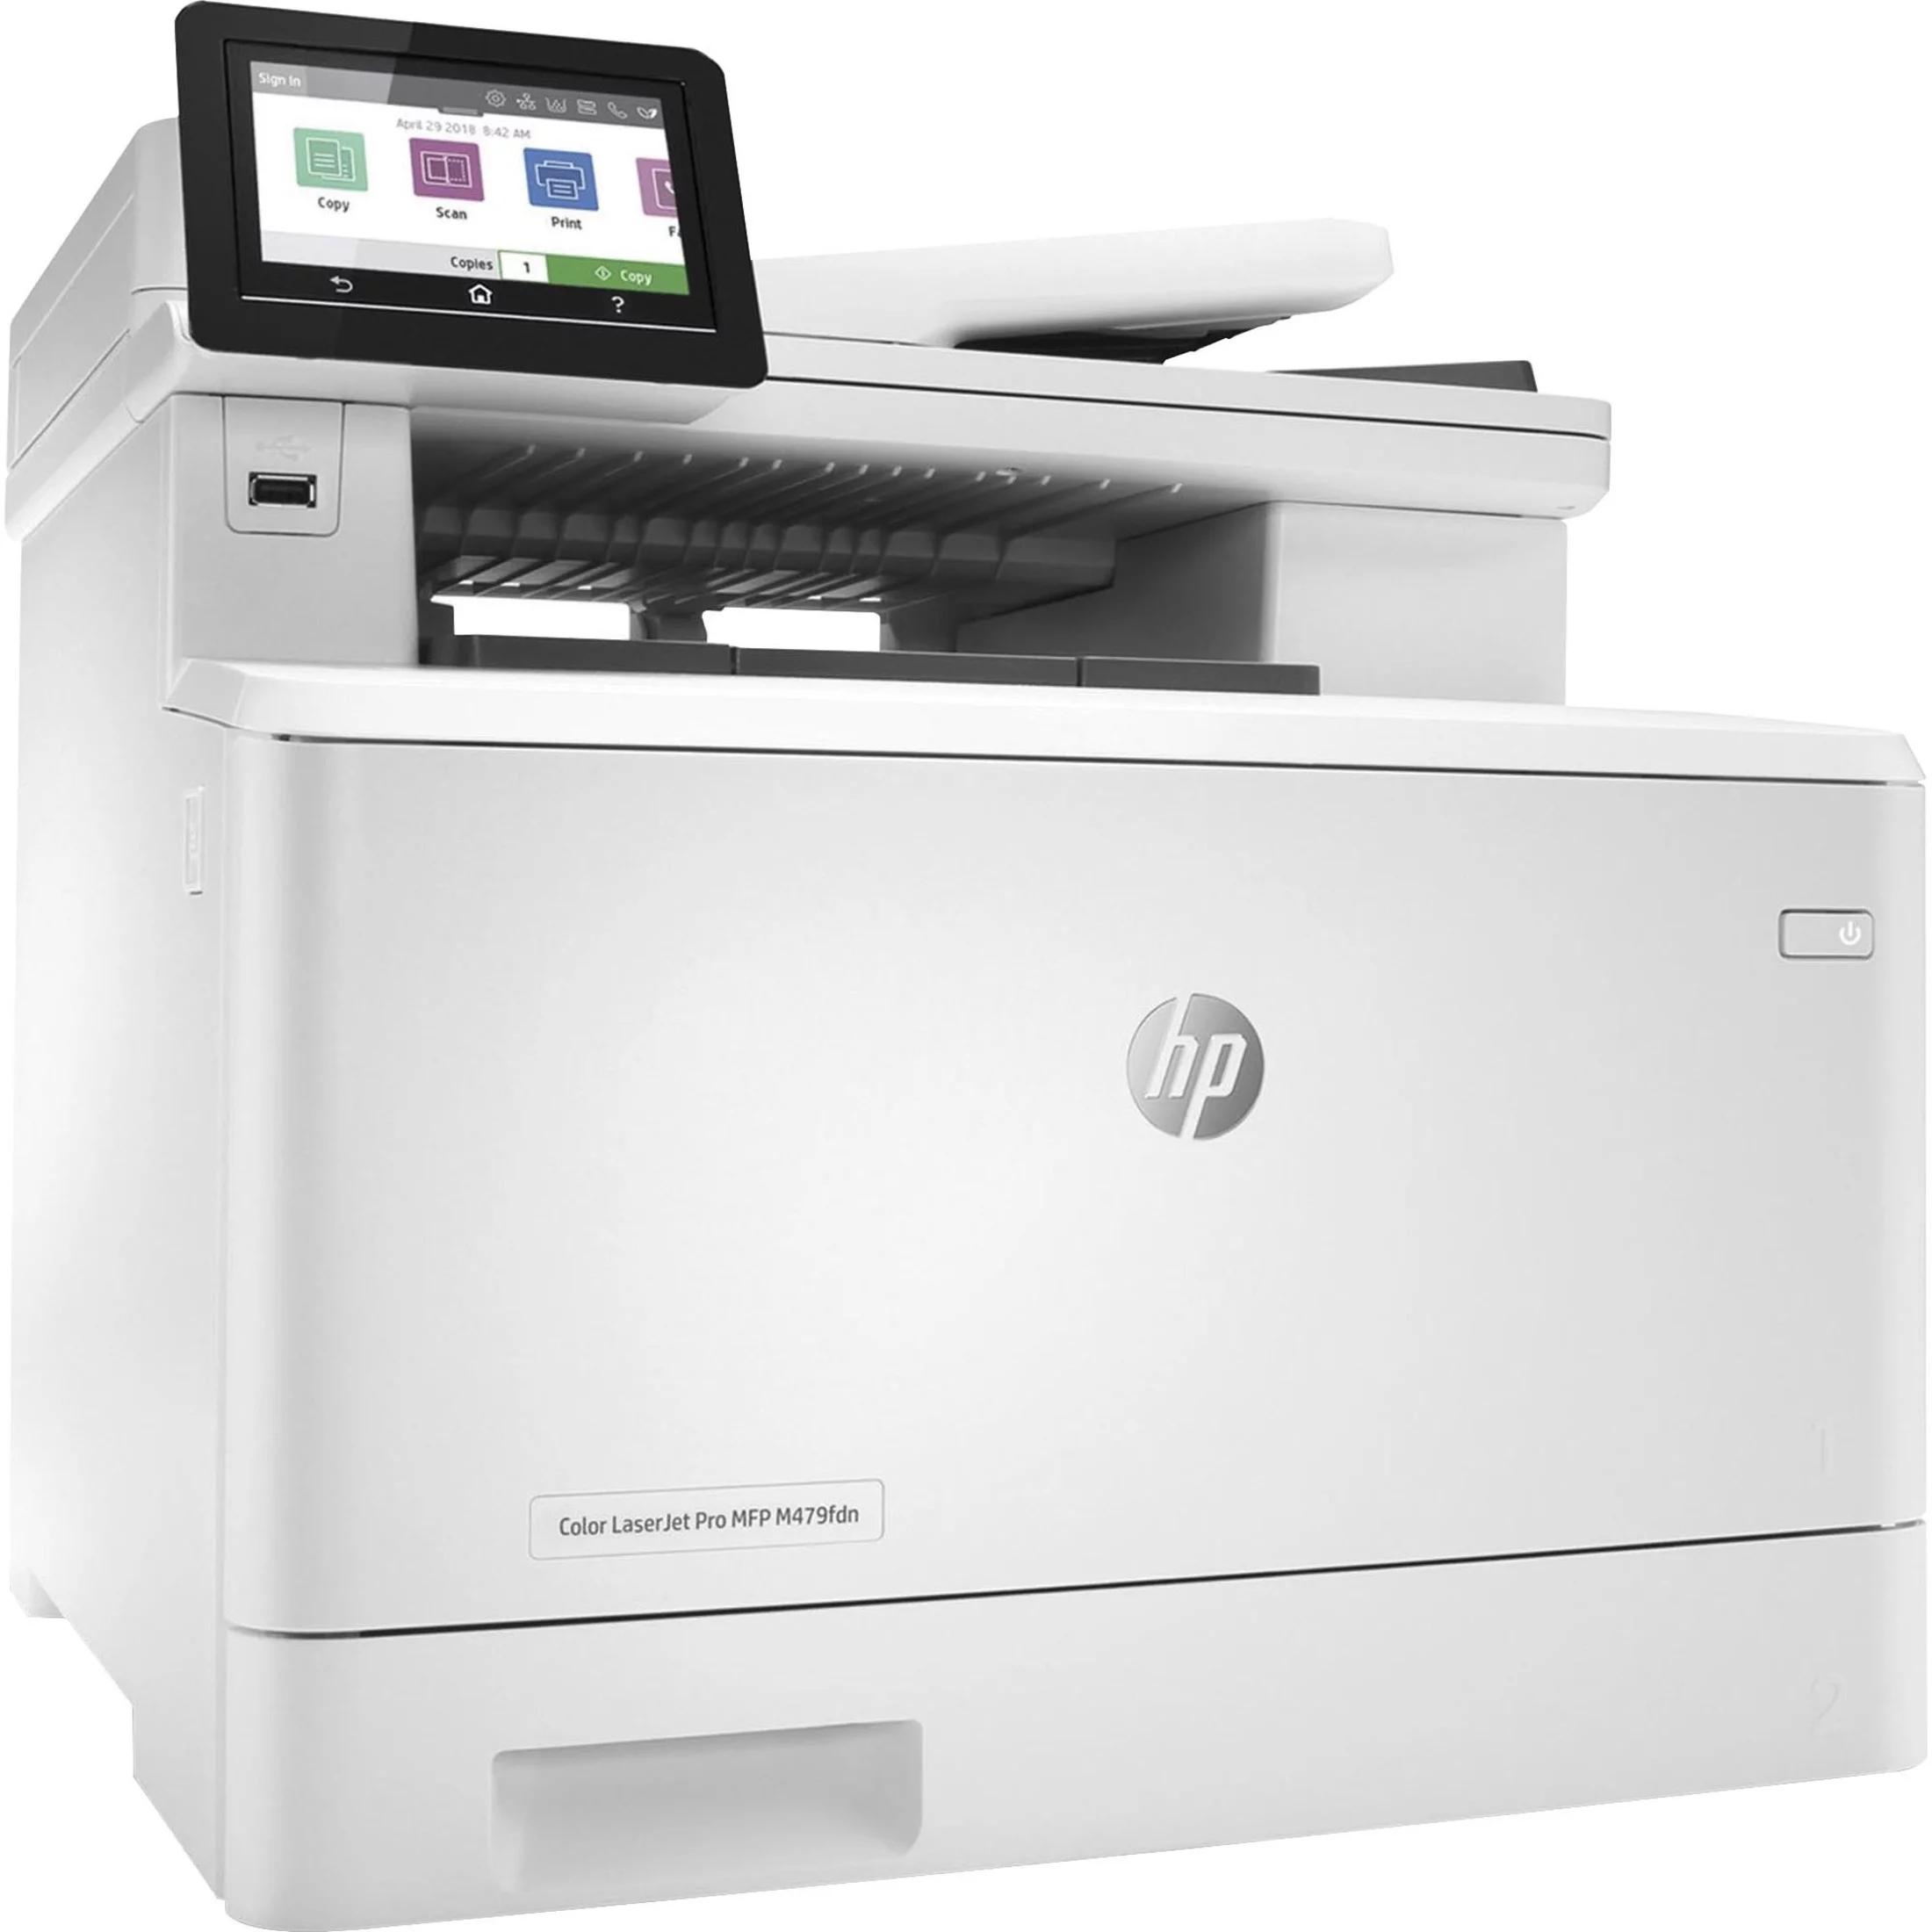 Hewlett packard m479: powerful & efficient printer